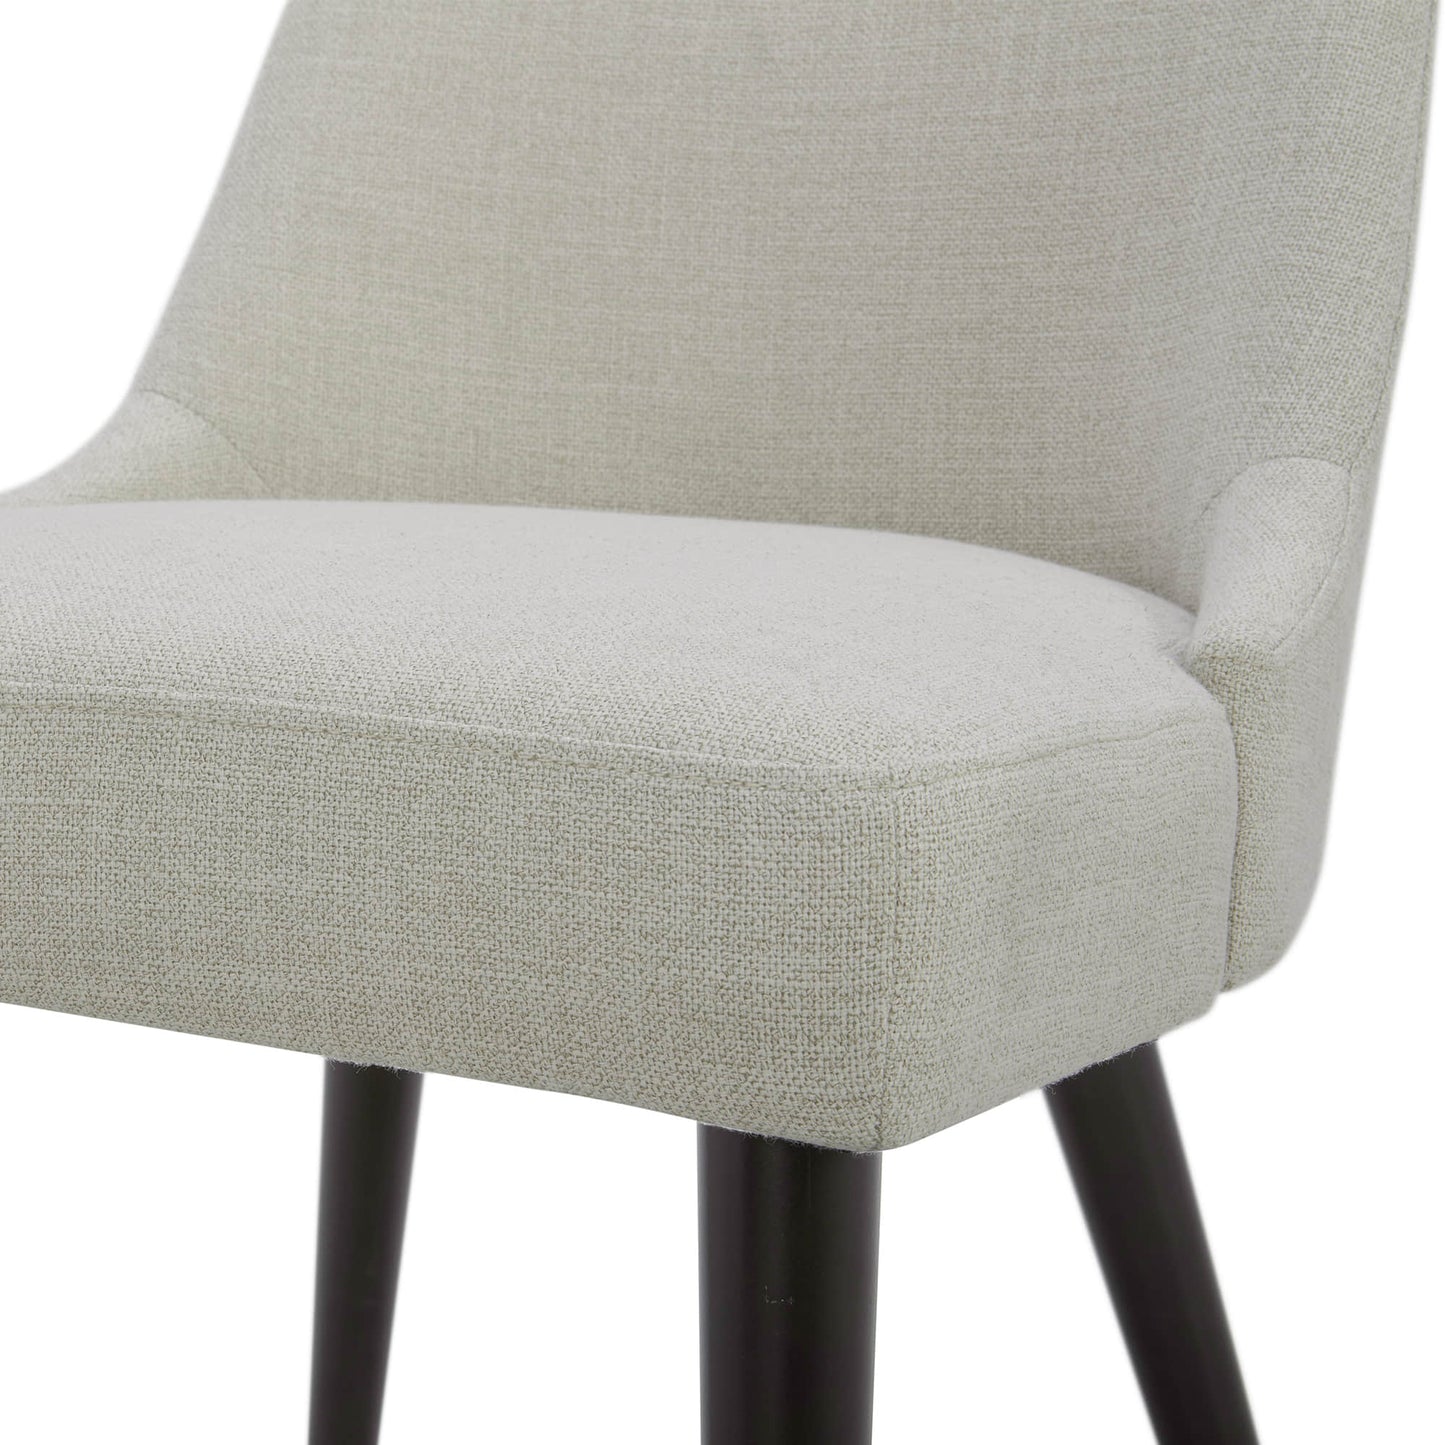 CHITA LIVING-Rhett Dining Chair (Set of 2)-Dining Chairs-Performance Fabric-Linen-